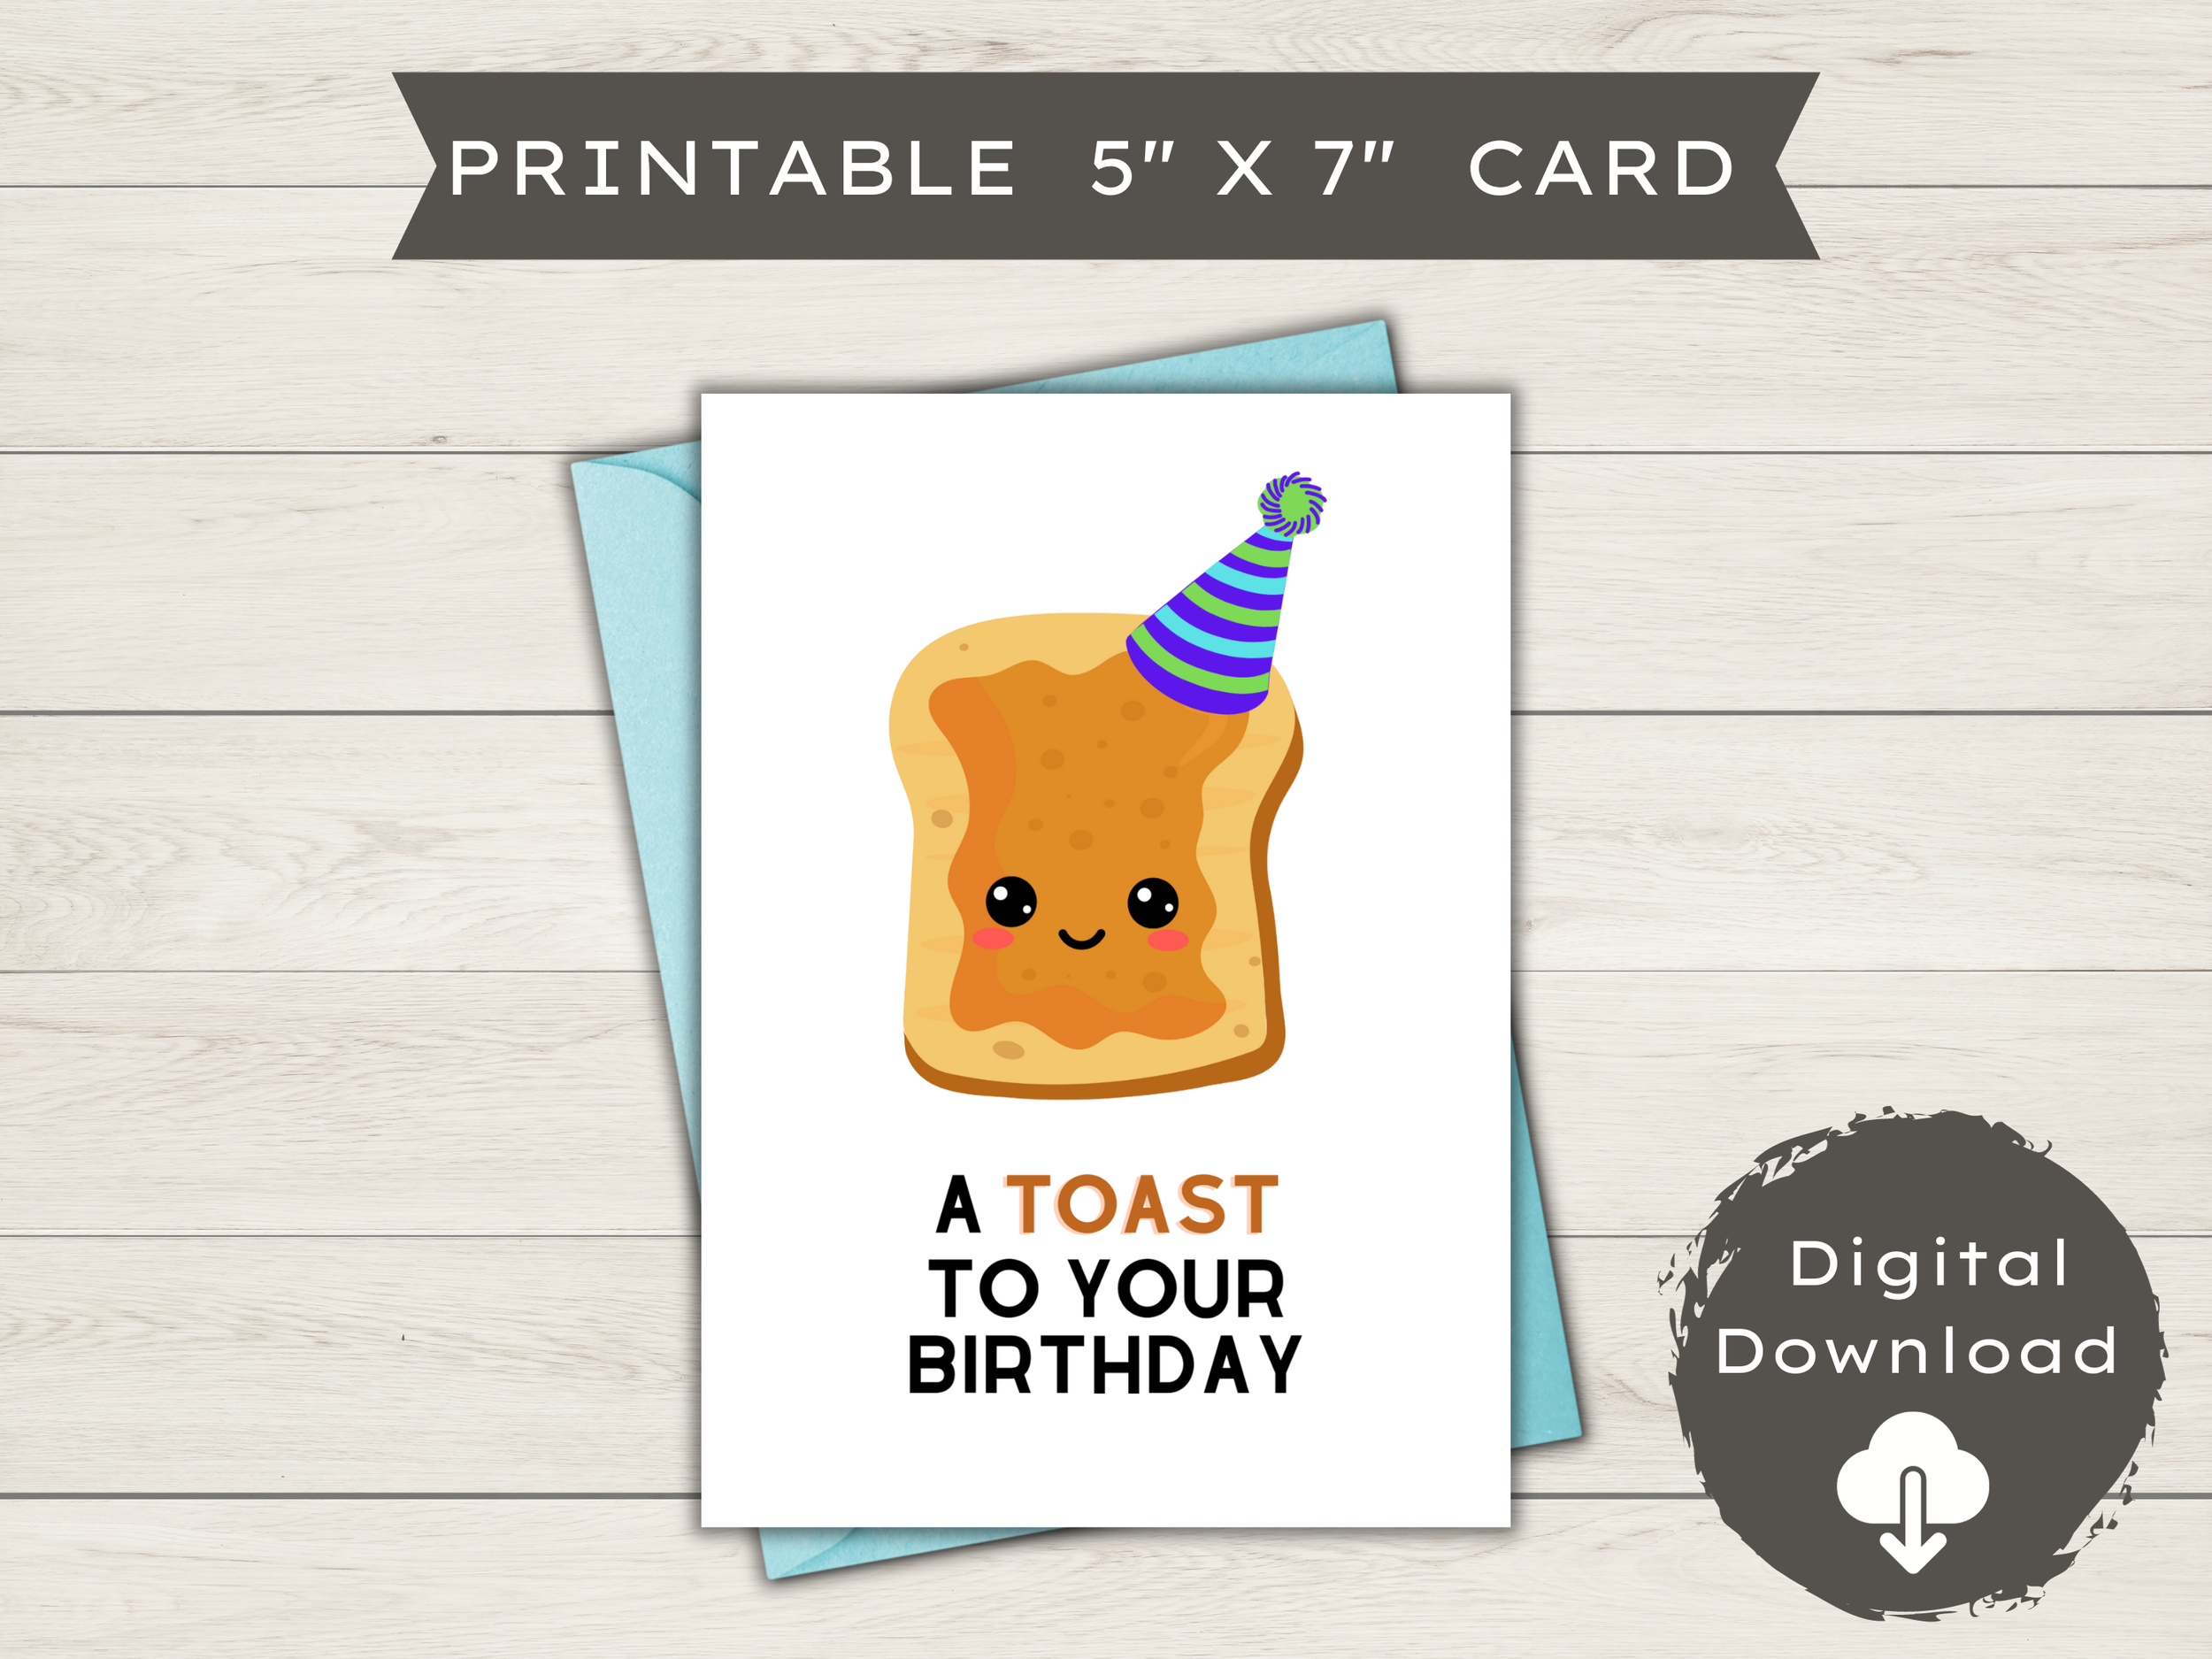 Printable Birthday Card - A Toast to Your Birthday